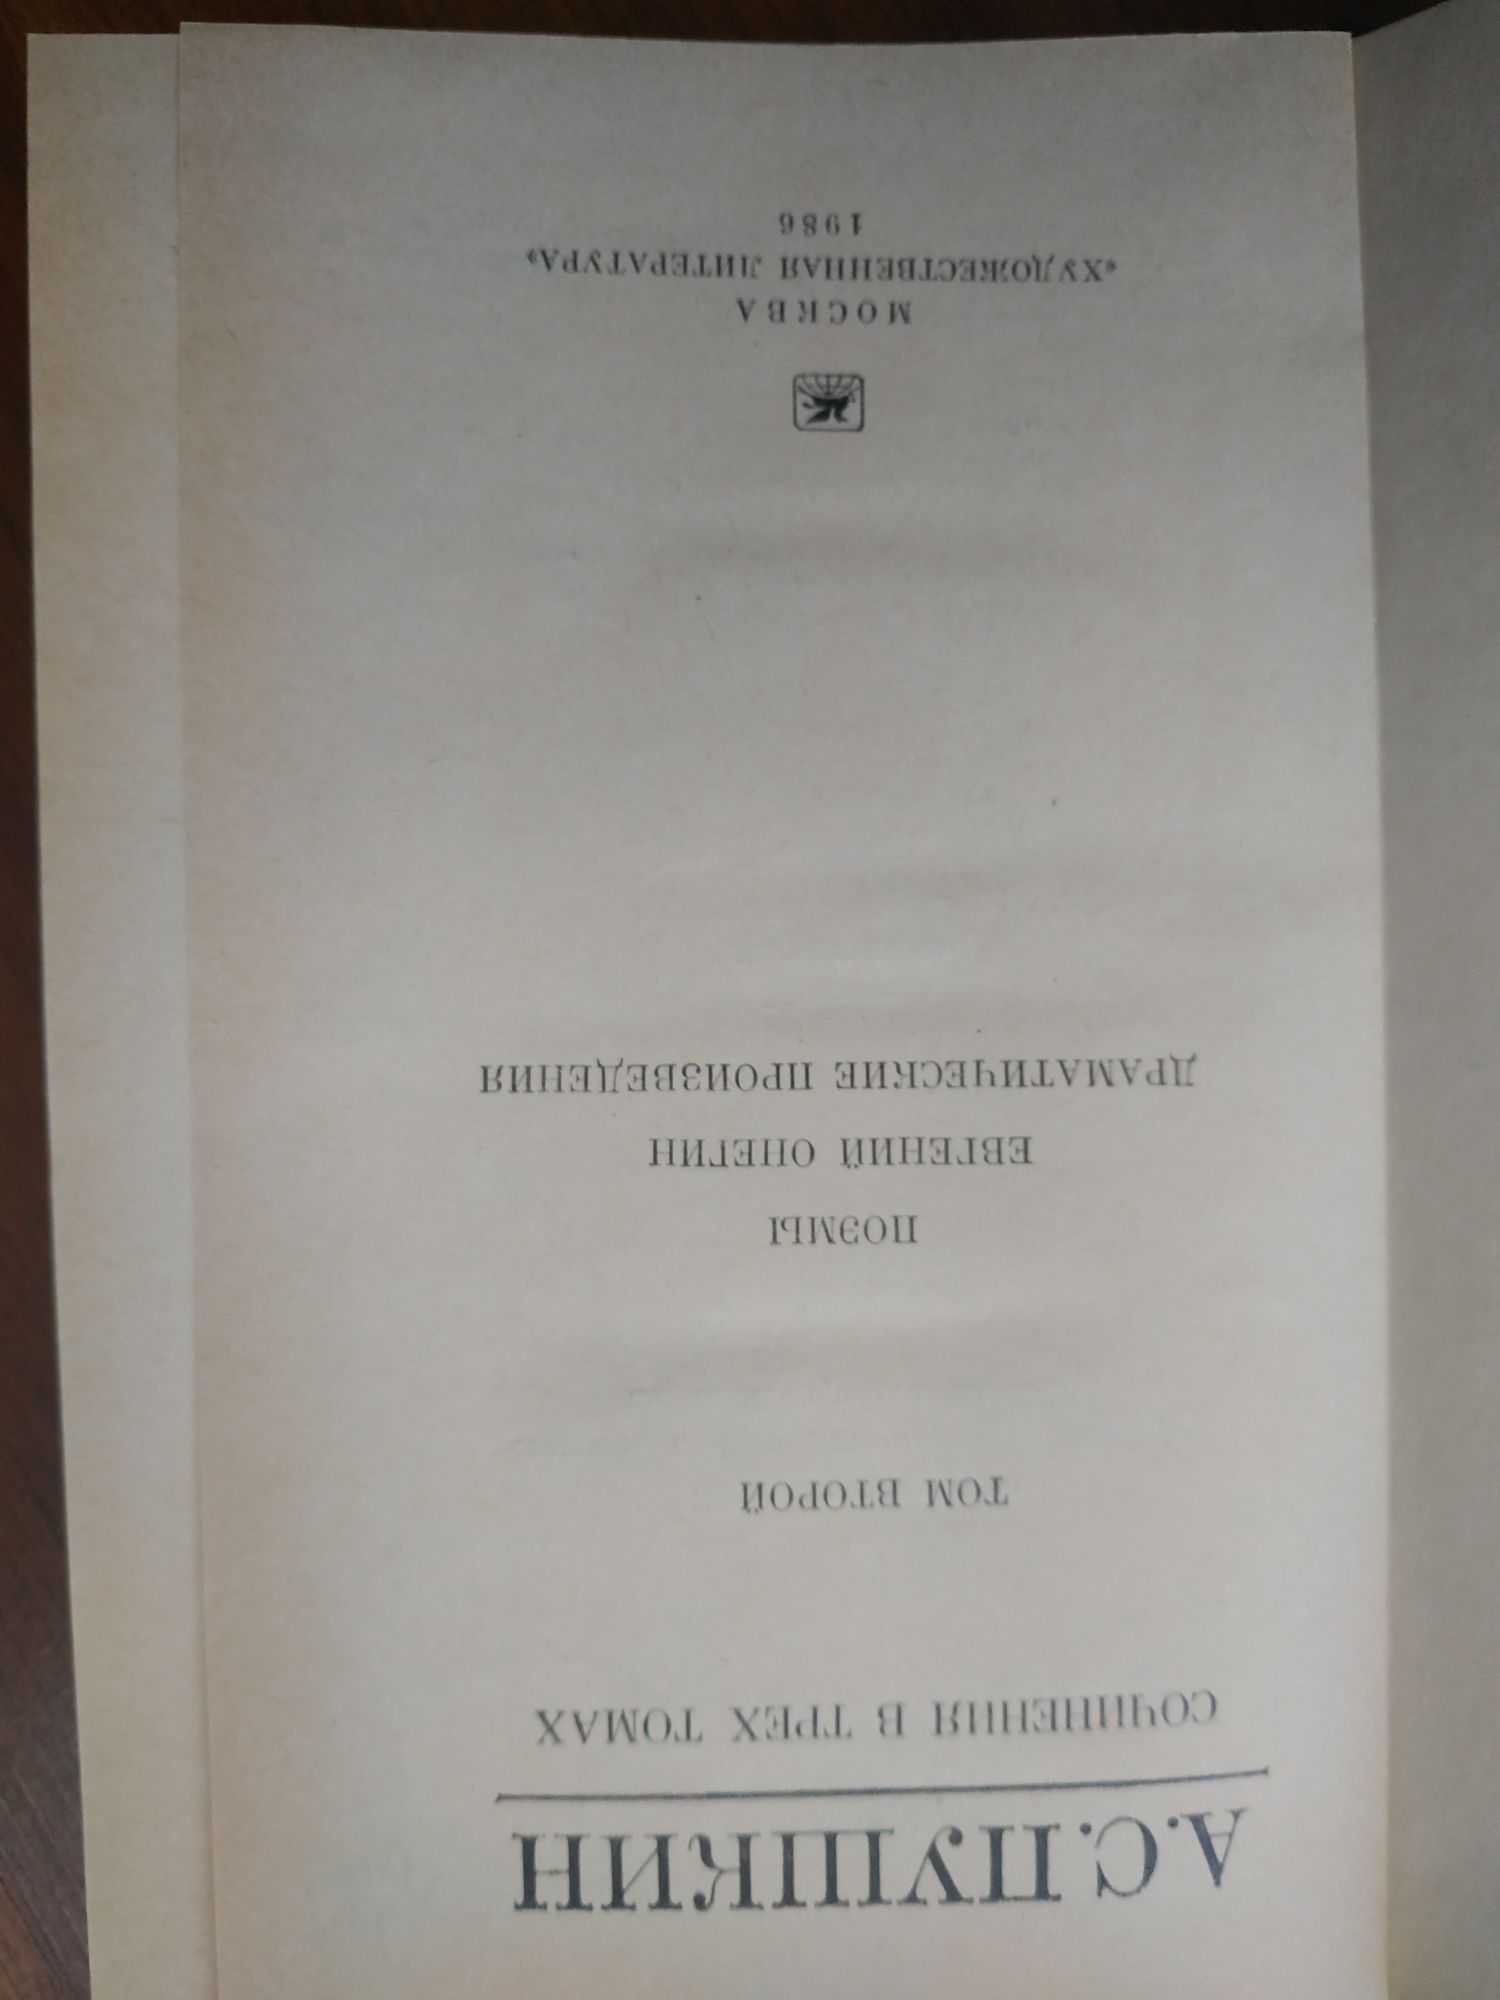 А.С. Пушкин - Собрание сочинений в 3 томах